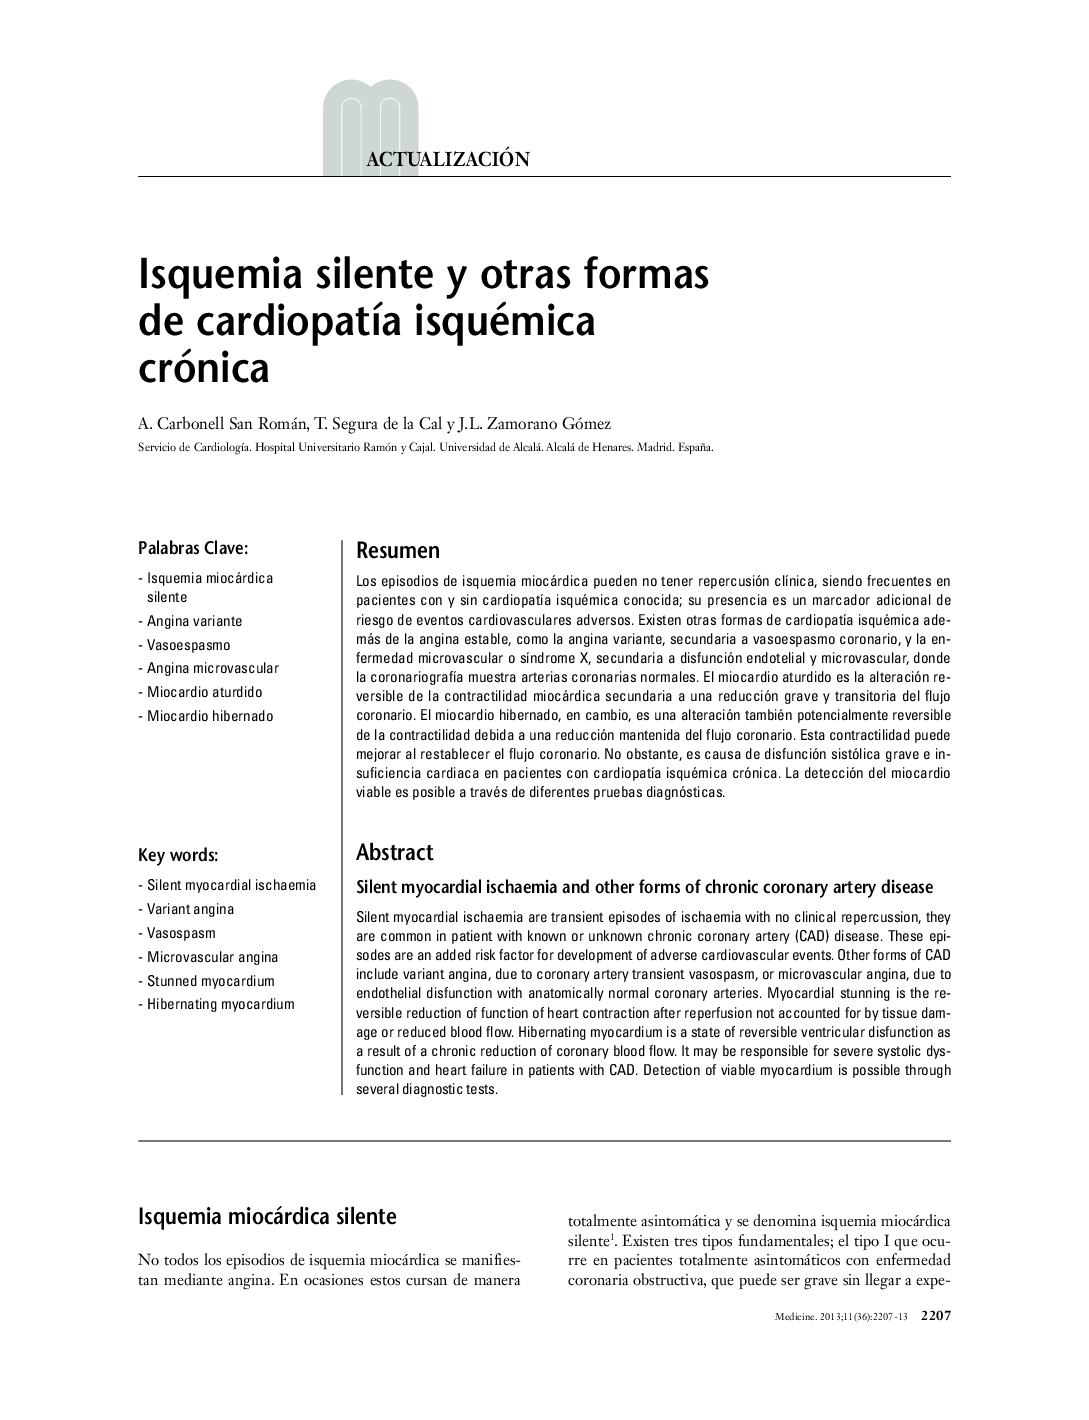 Isquemia silente y otras formas de cardiopatÃ­a isquémica crónica